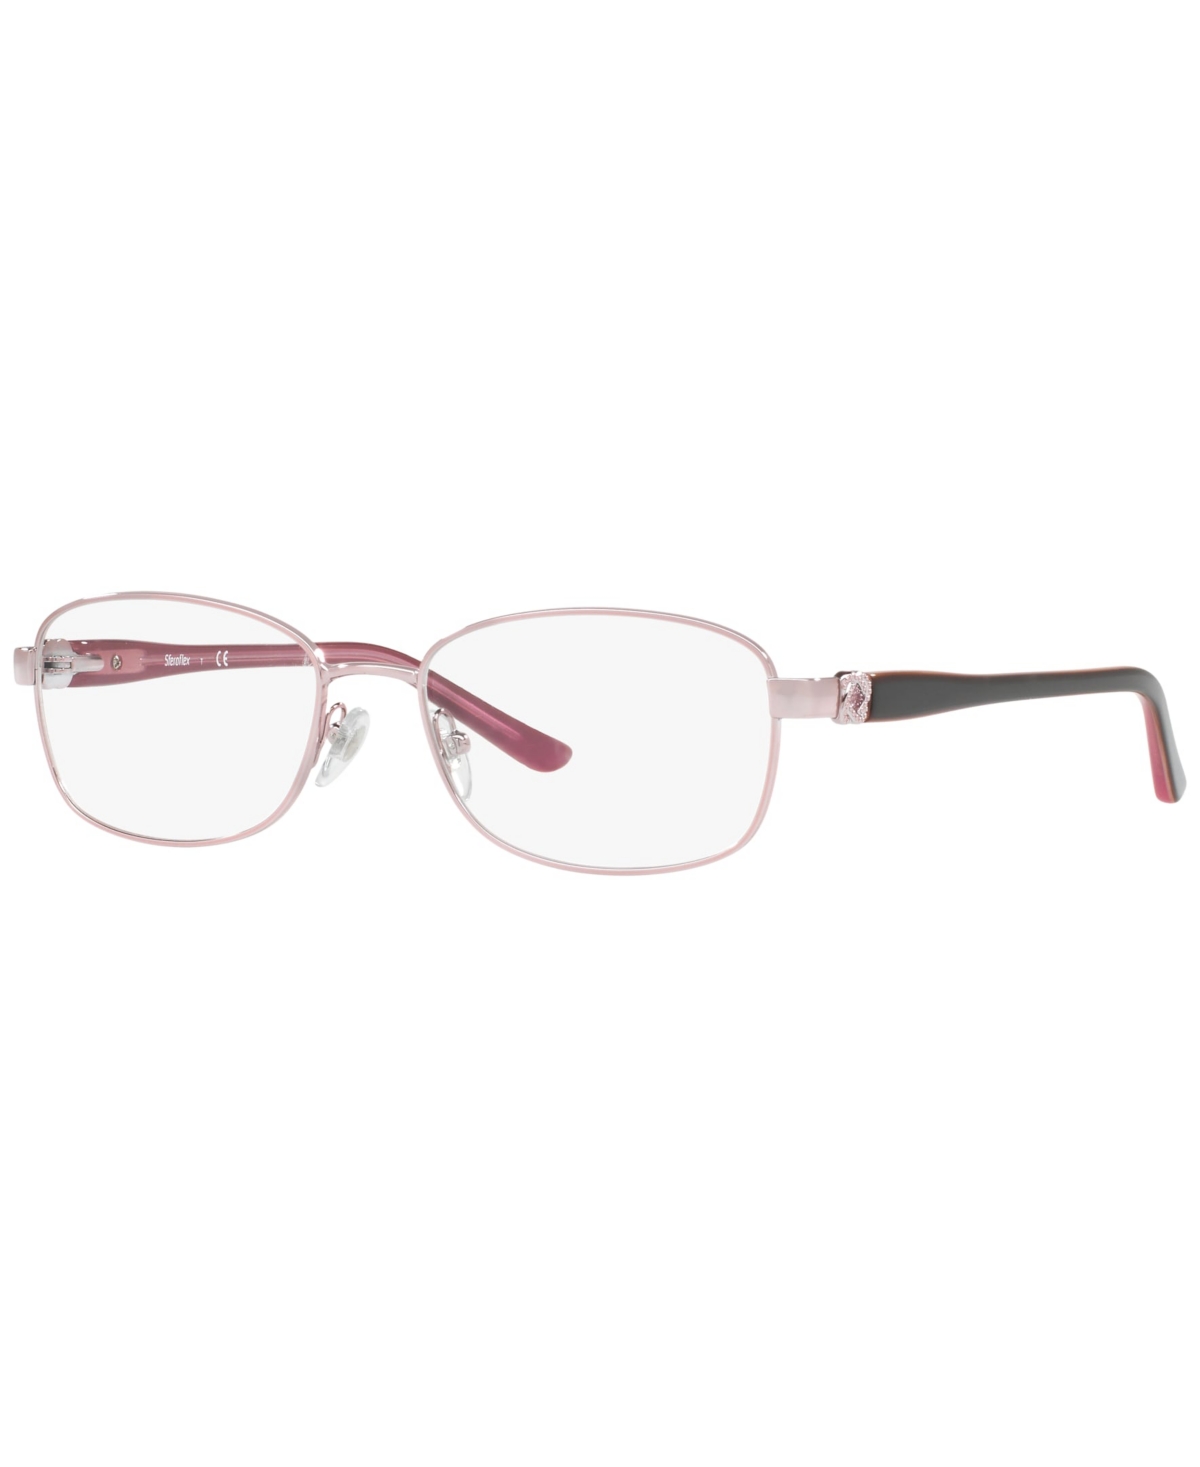 Steroflex Women's Eyeglasses, SF2570 - Shiny Pink